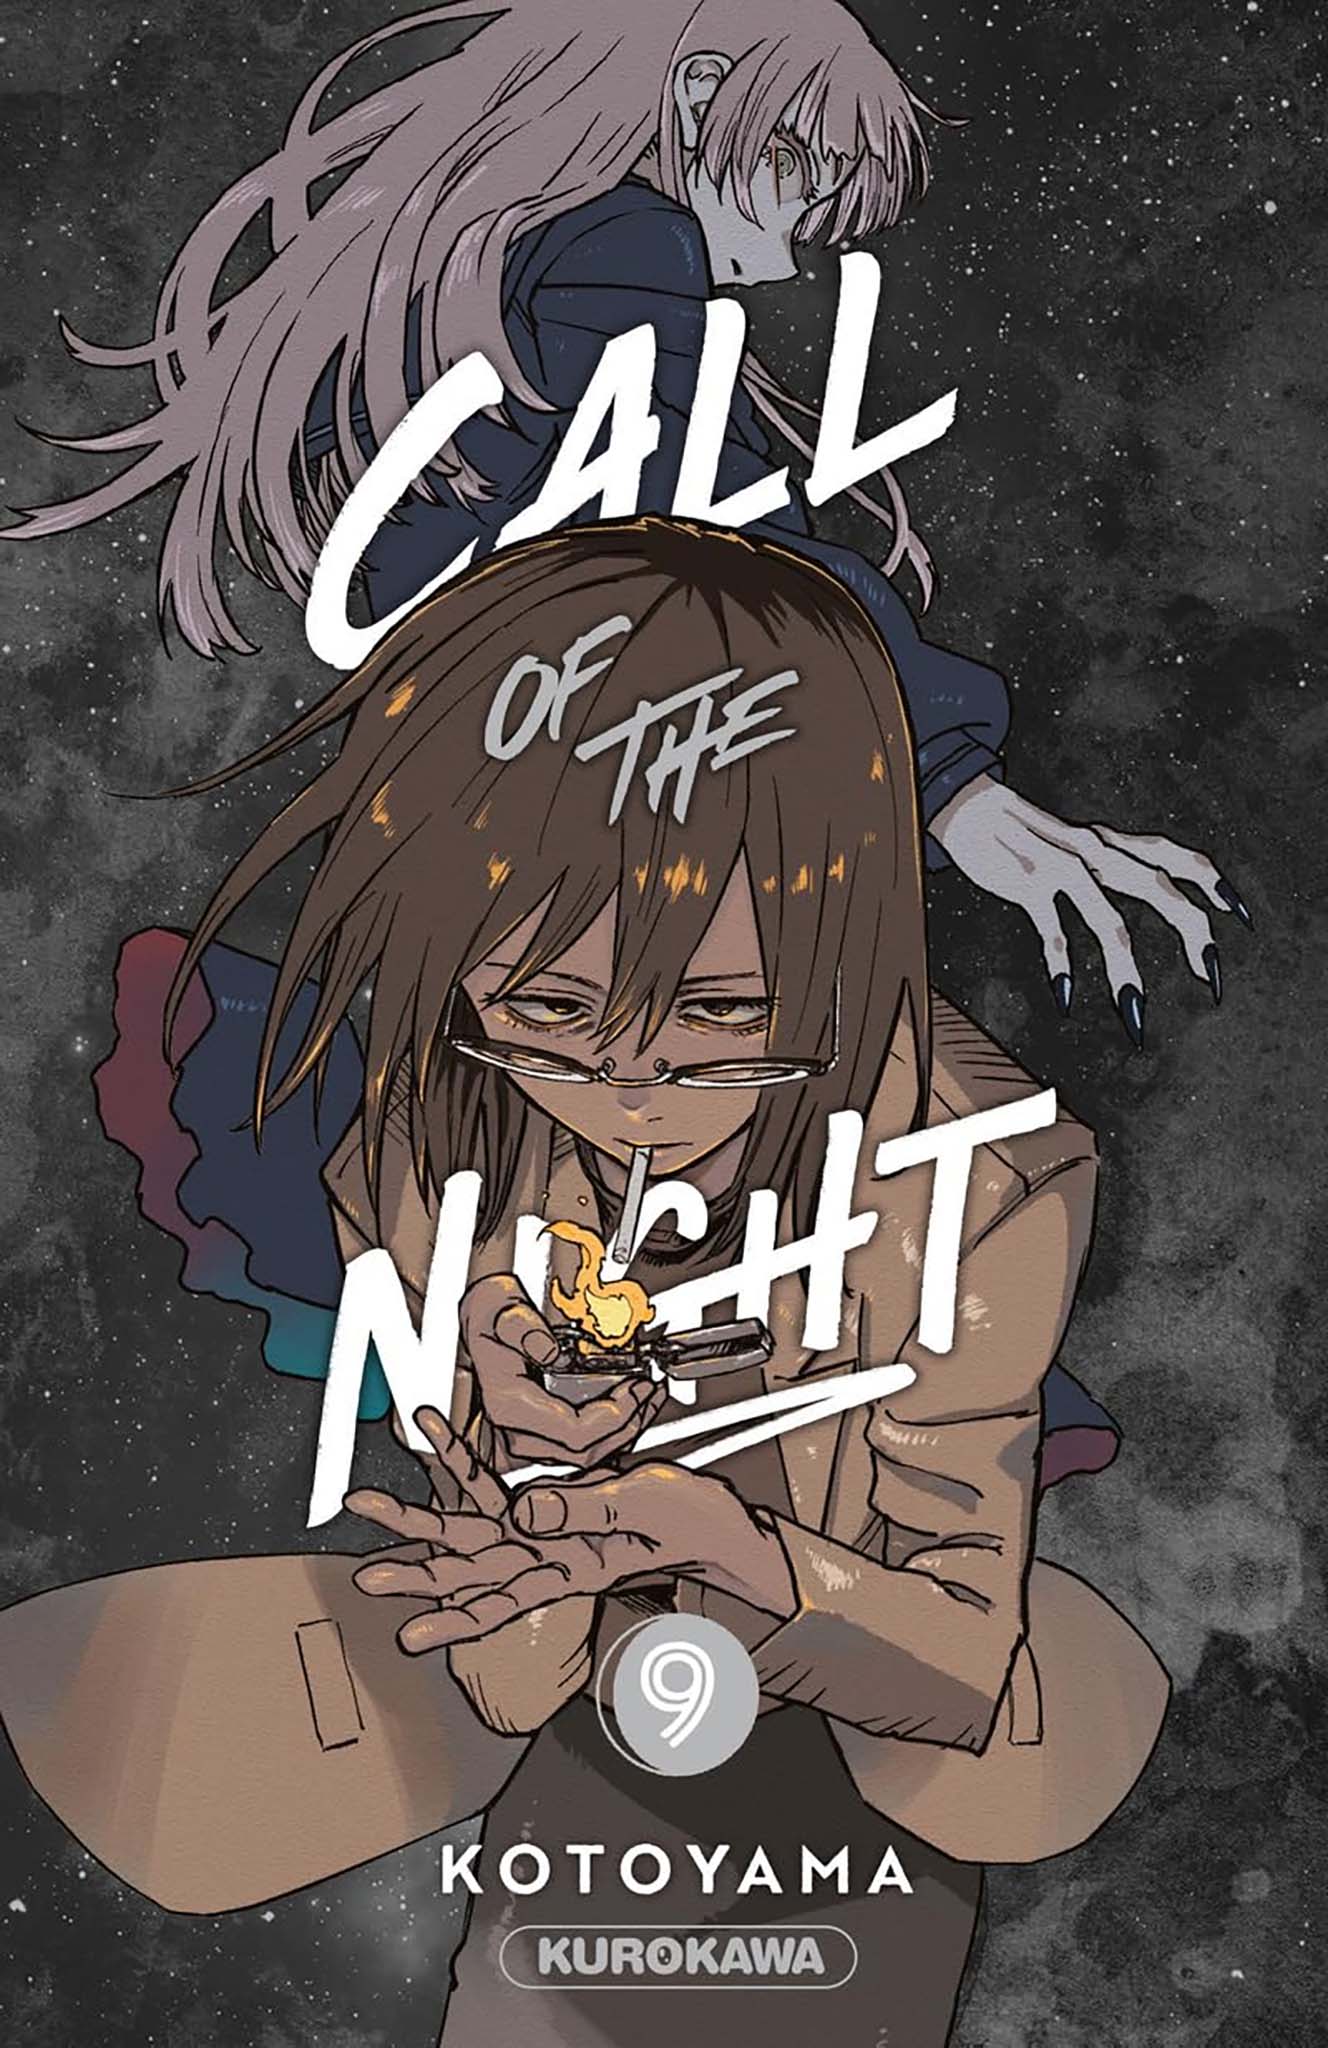 Tome 9 du manga Call of the Night.